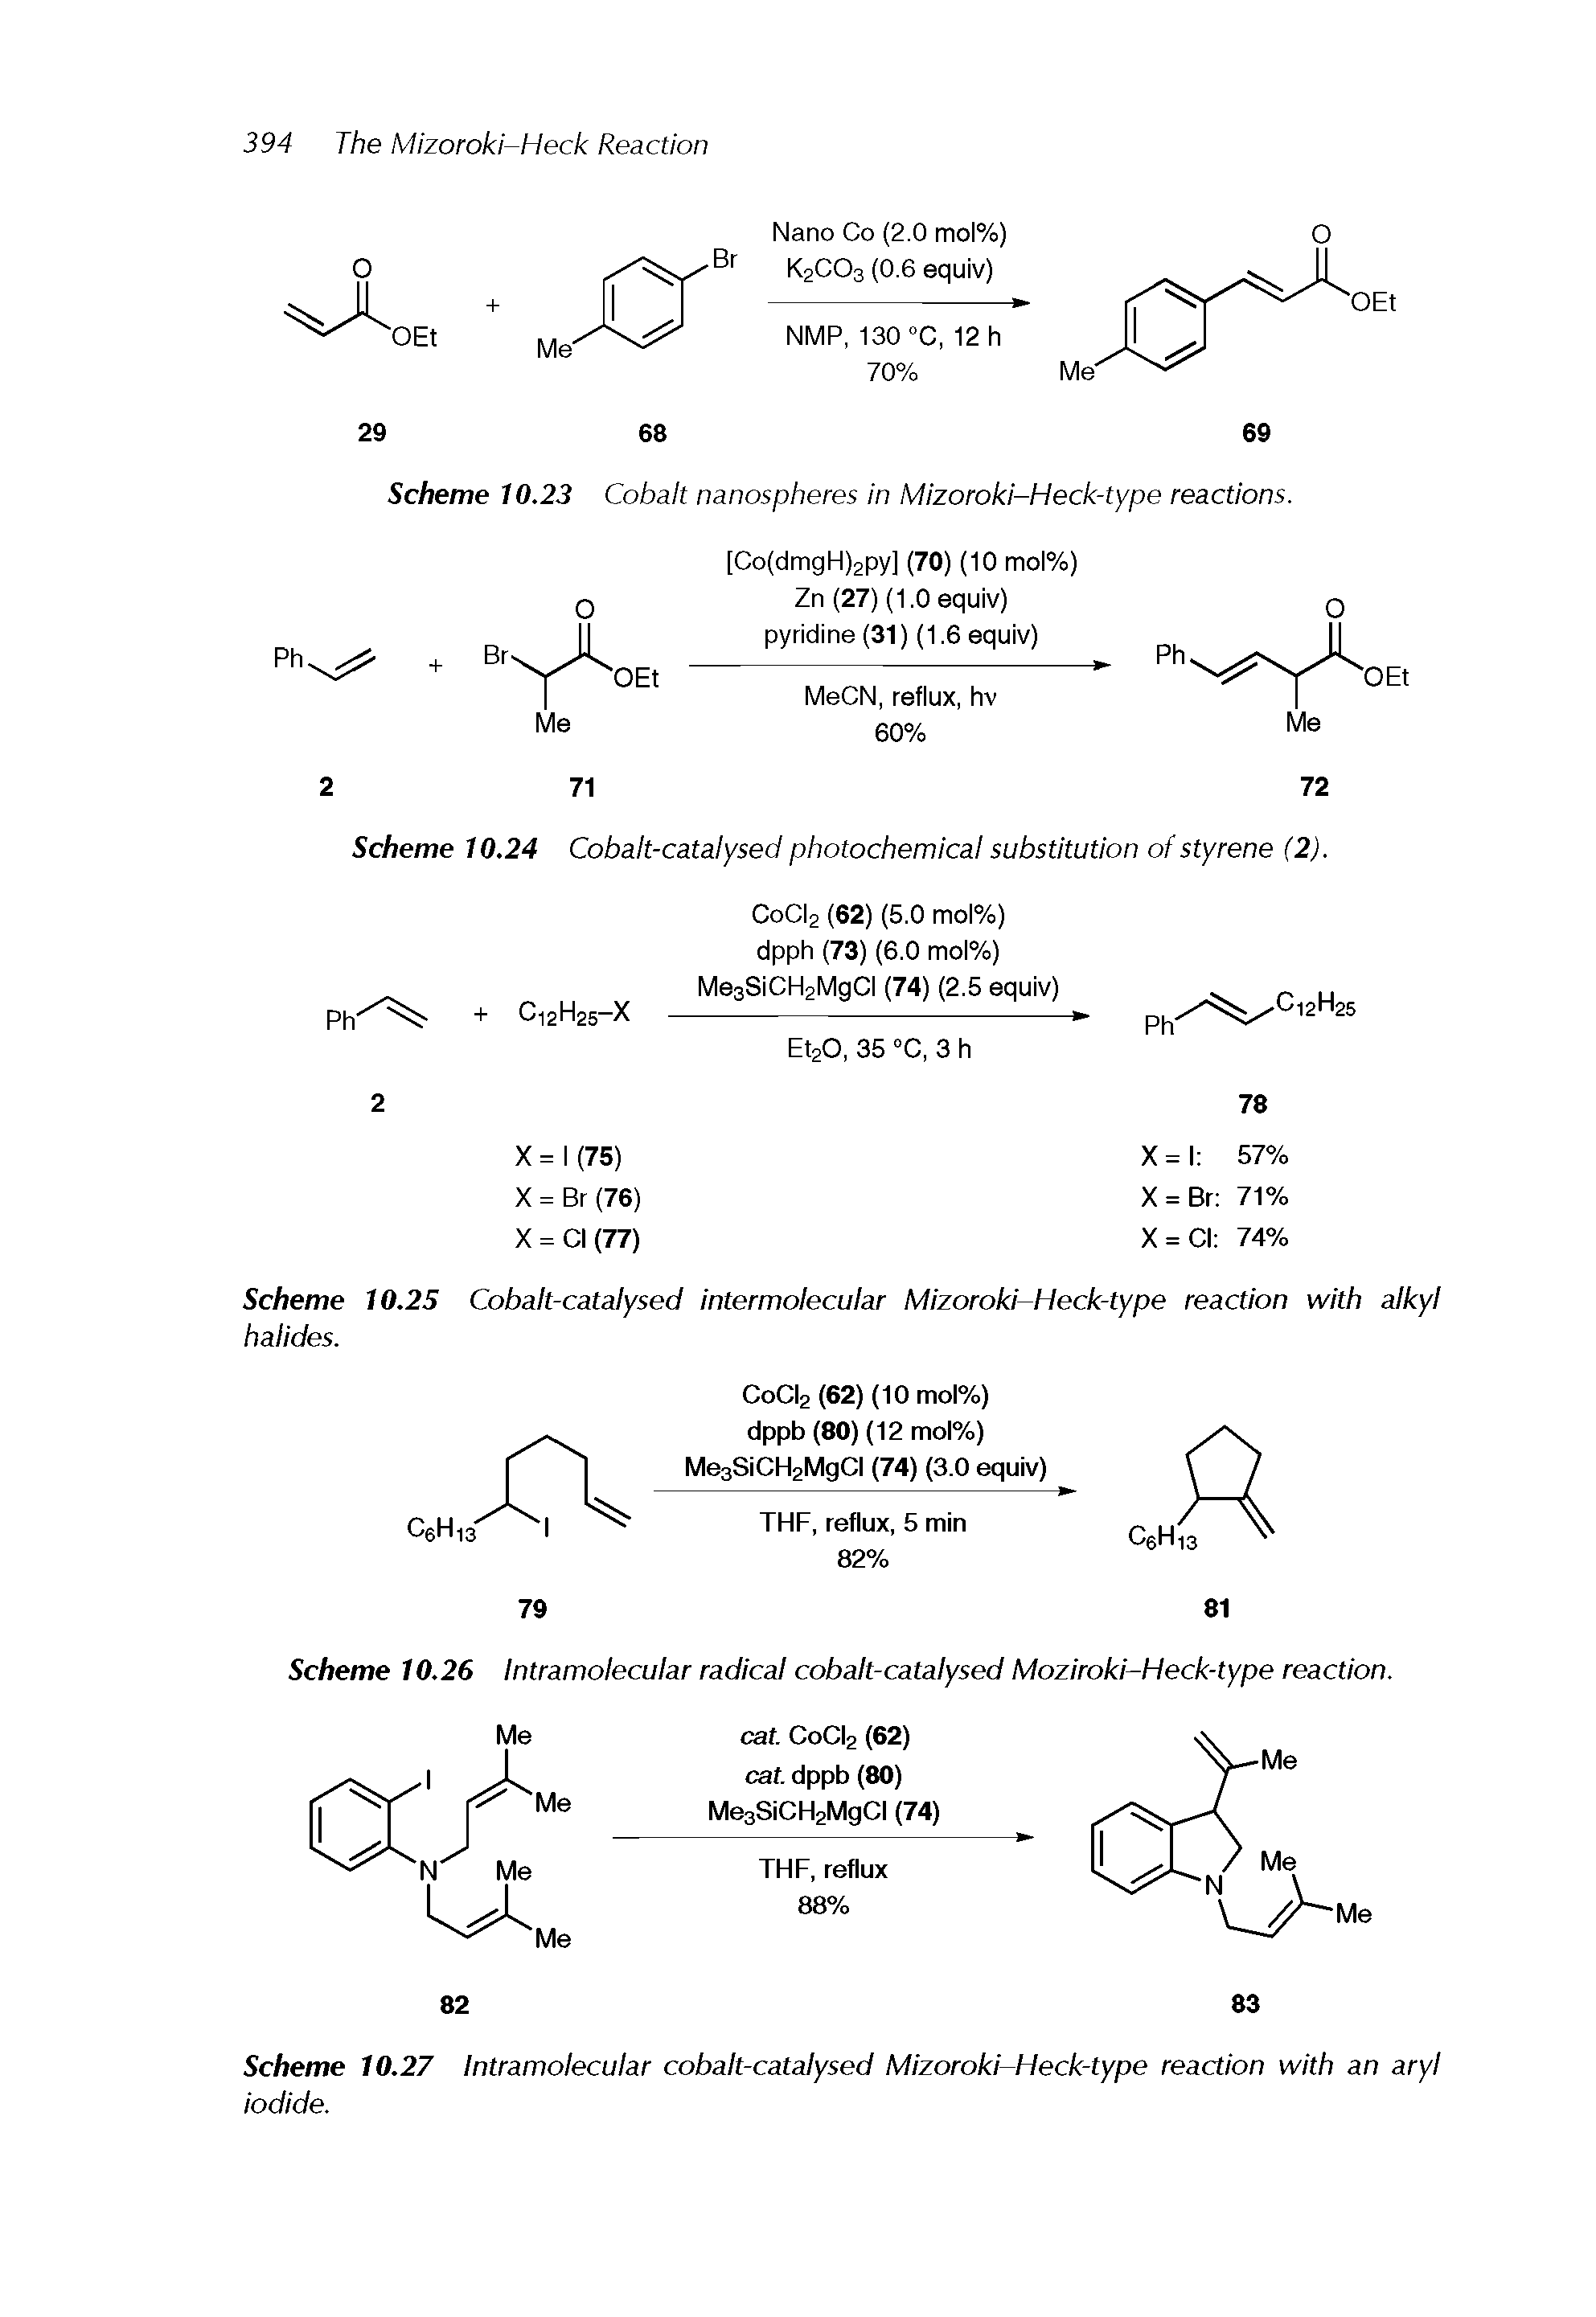 Scheme 10.27 Intramolecular cobalt-catalysed Mizoroki-Heck-type reaction with an aryl iodide.